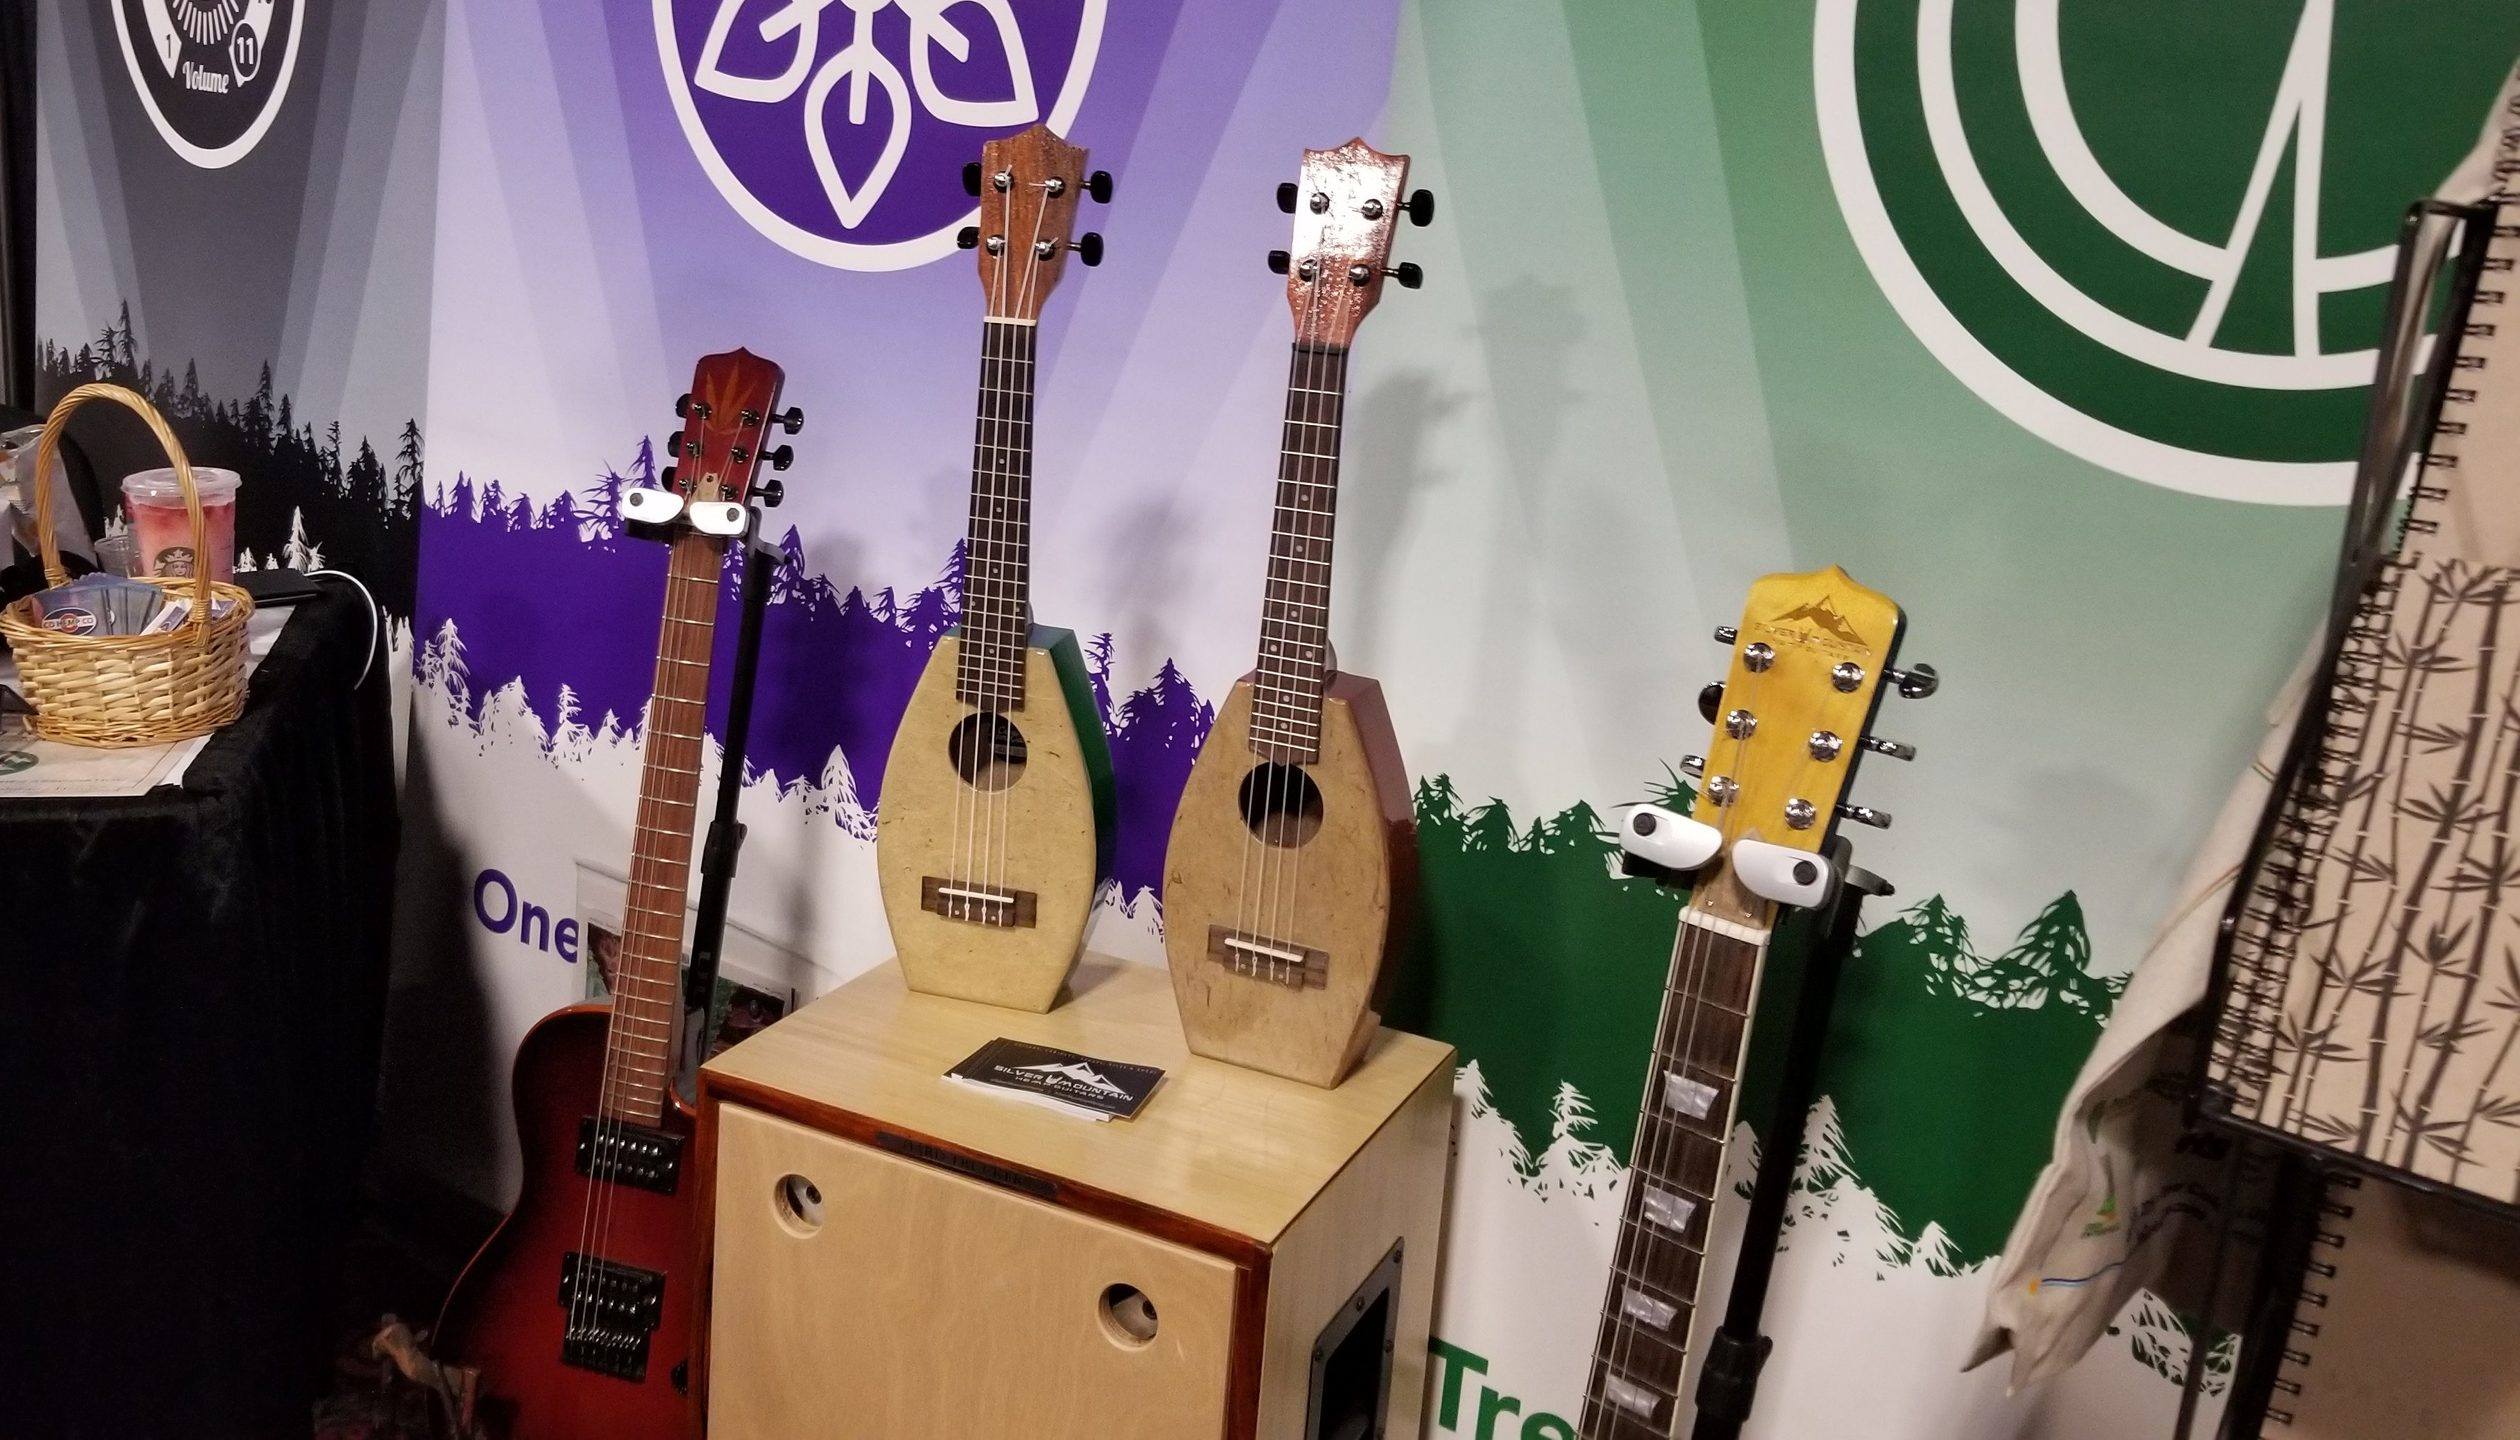 Hemp guitars and a hemp ukelele from Silver Mountain Hemp Guitars, on display at NoCo 6, the 2019 Noco Hemp Expo in Denver, Colorado.